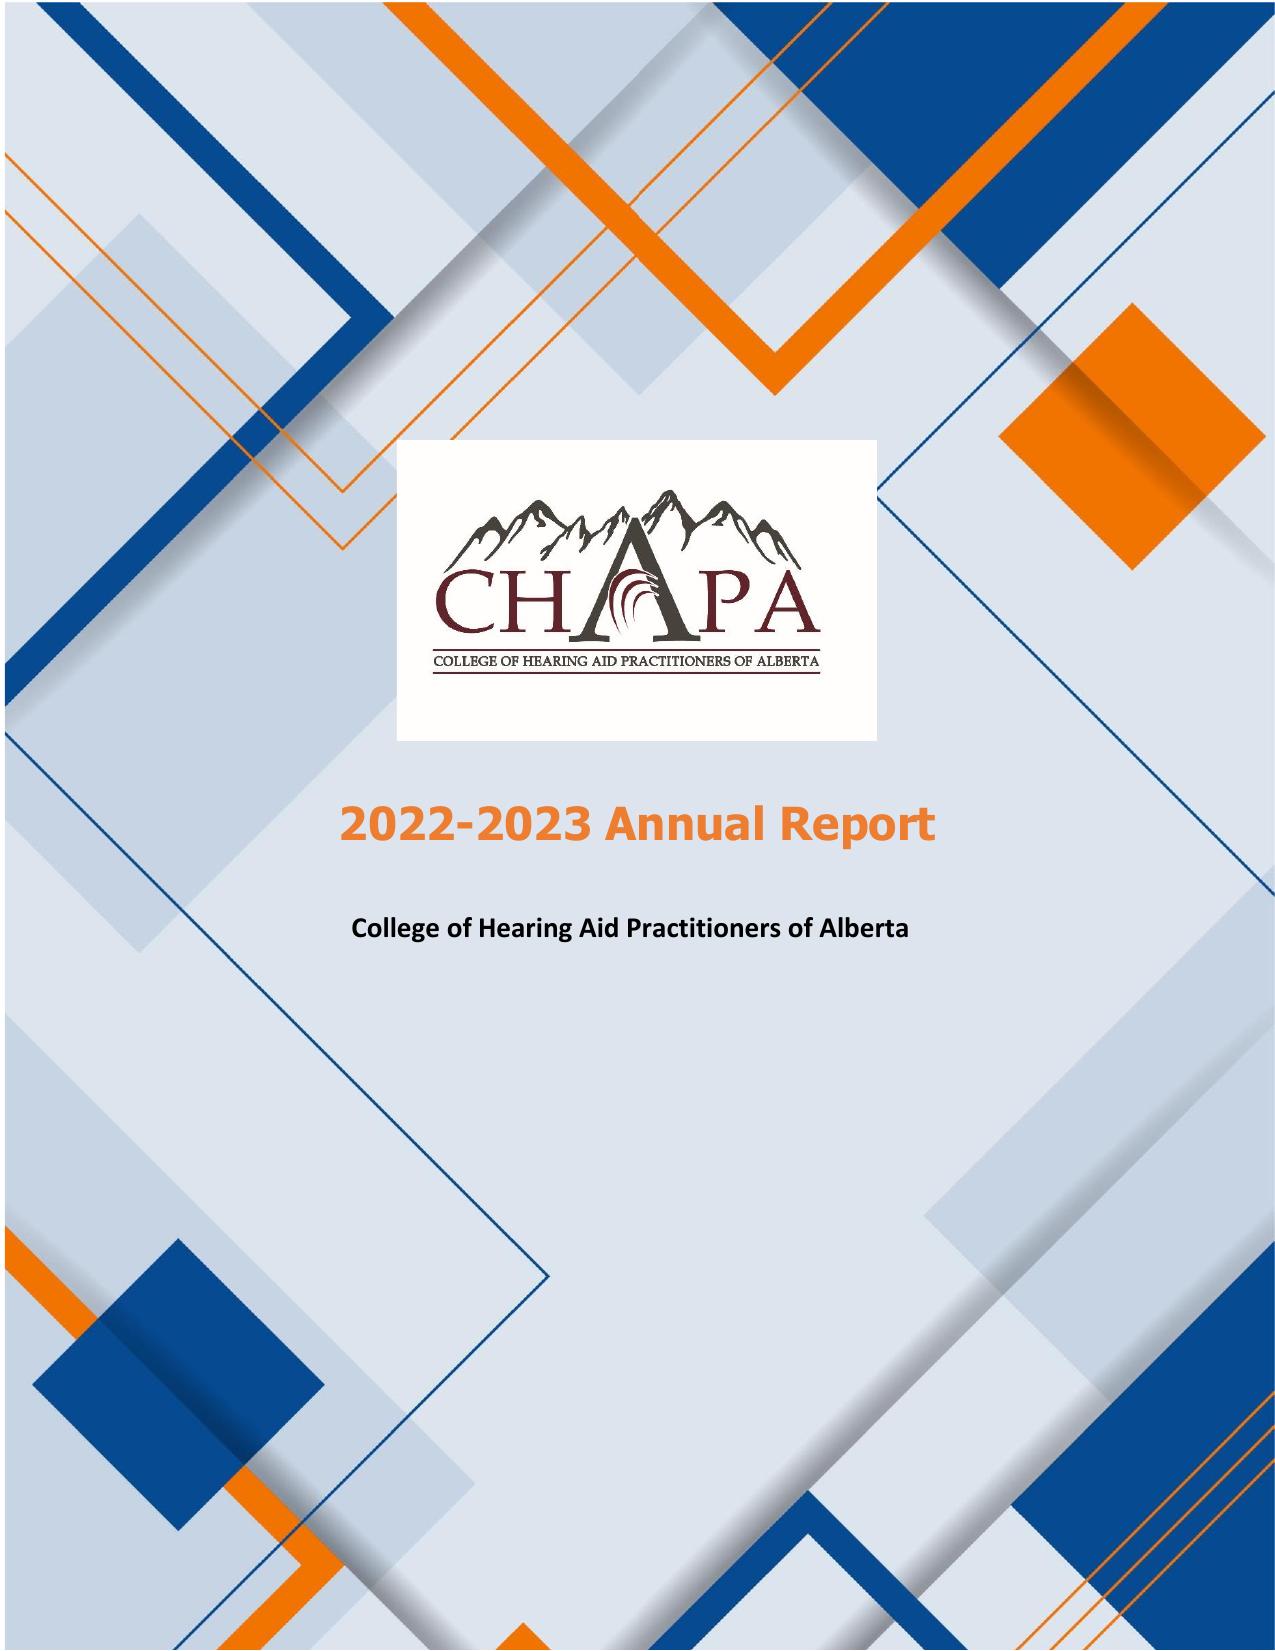 CHAPA 2023 Annual Report